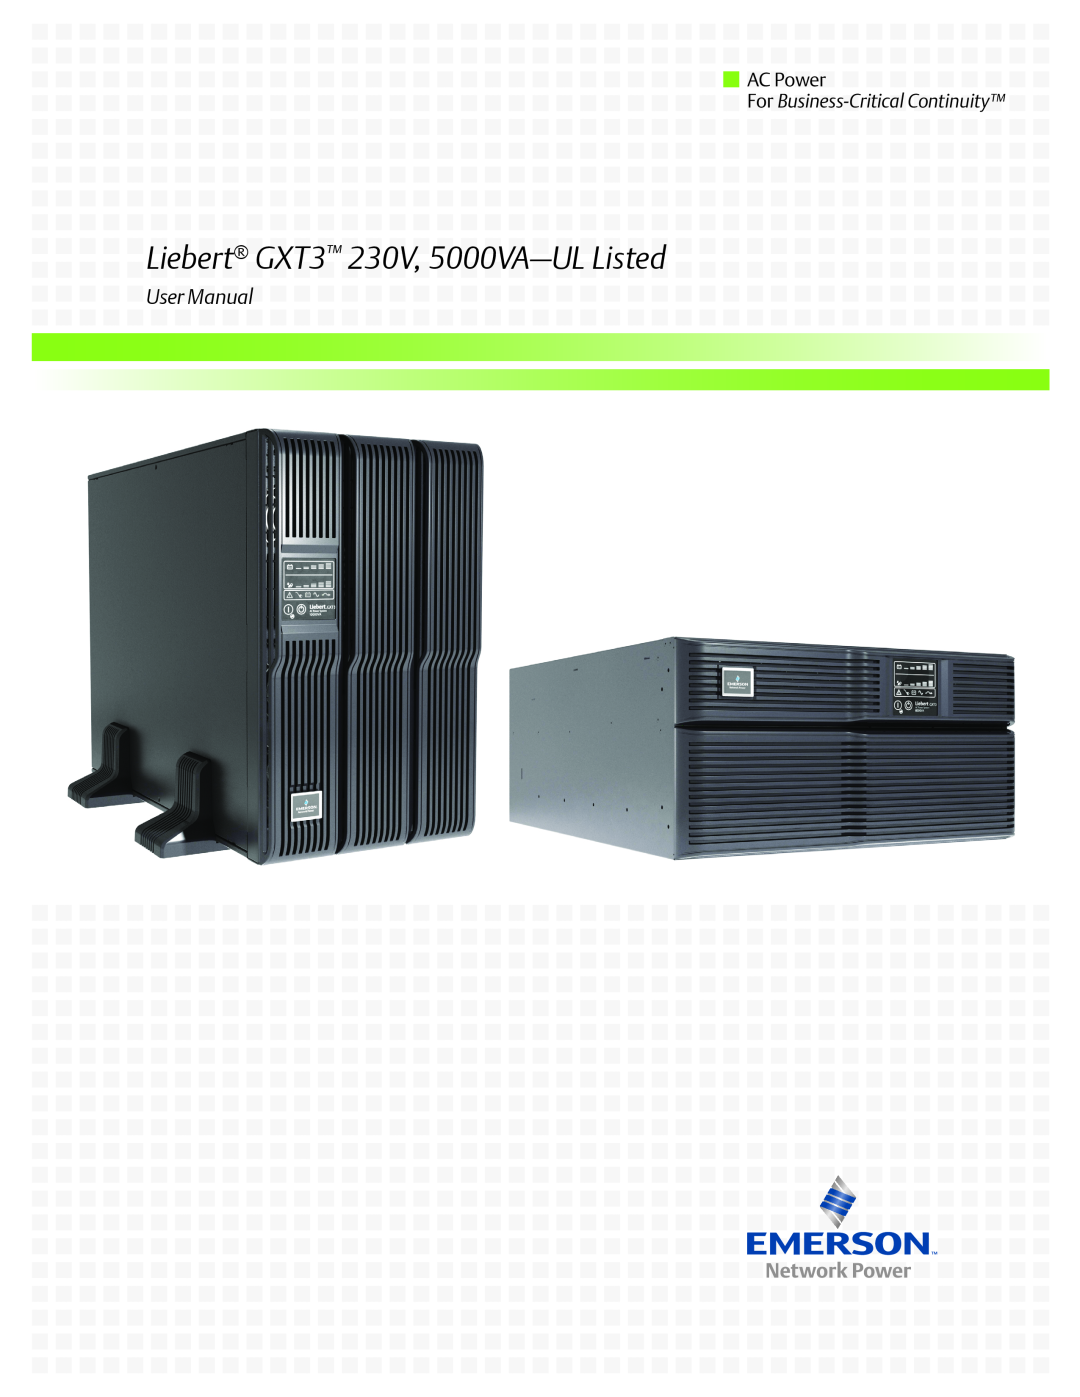 Emerson user manual Liebert GXT3 230V, 5000VA–ULListed, UserManual, AC Power, For Business-CriticalContinuity 